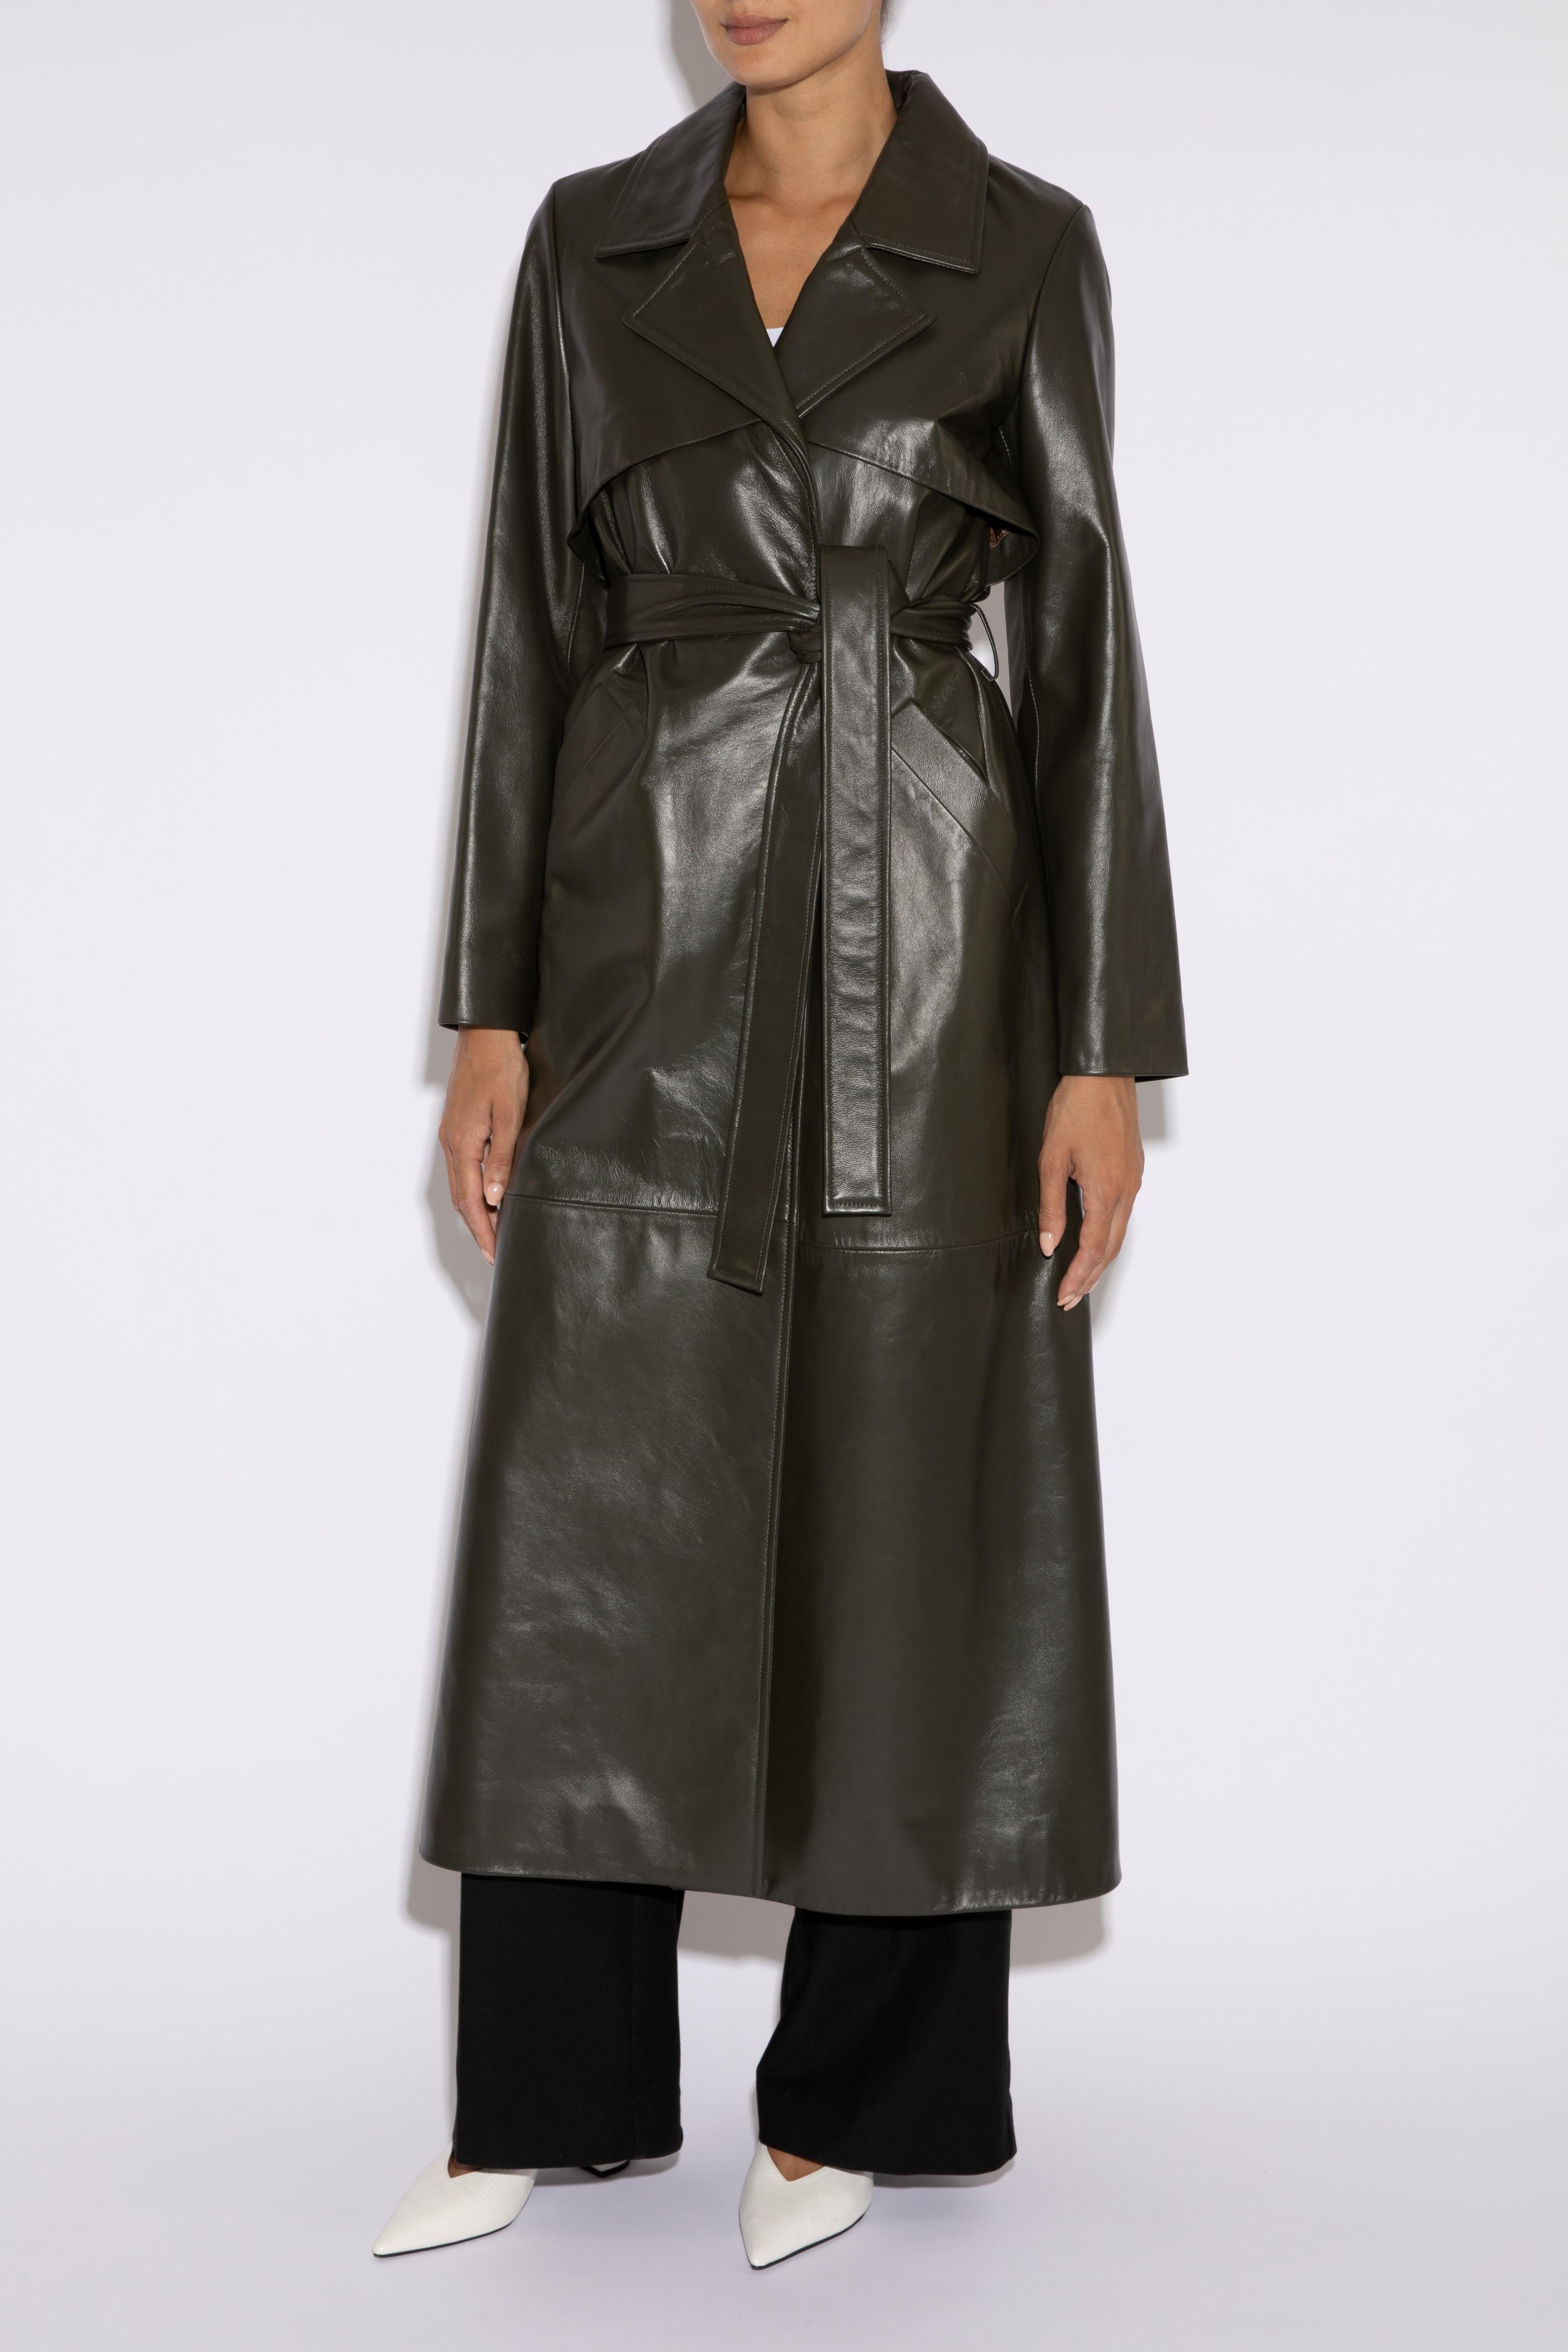 Women's Verheyen London Leather Trench Coat in Dark Khaki Green - Size uk 14 For Sale